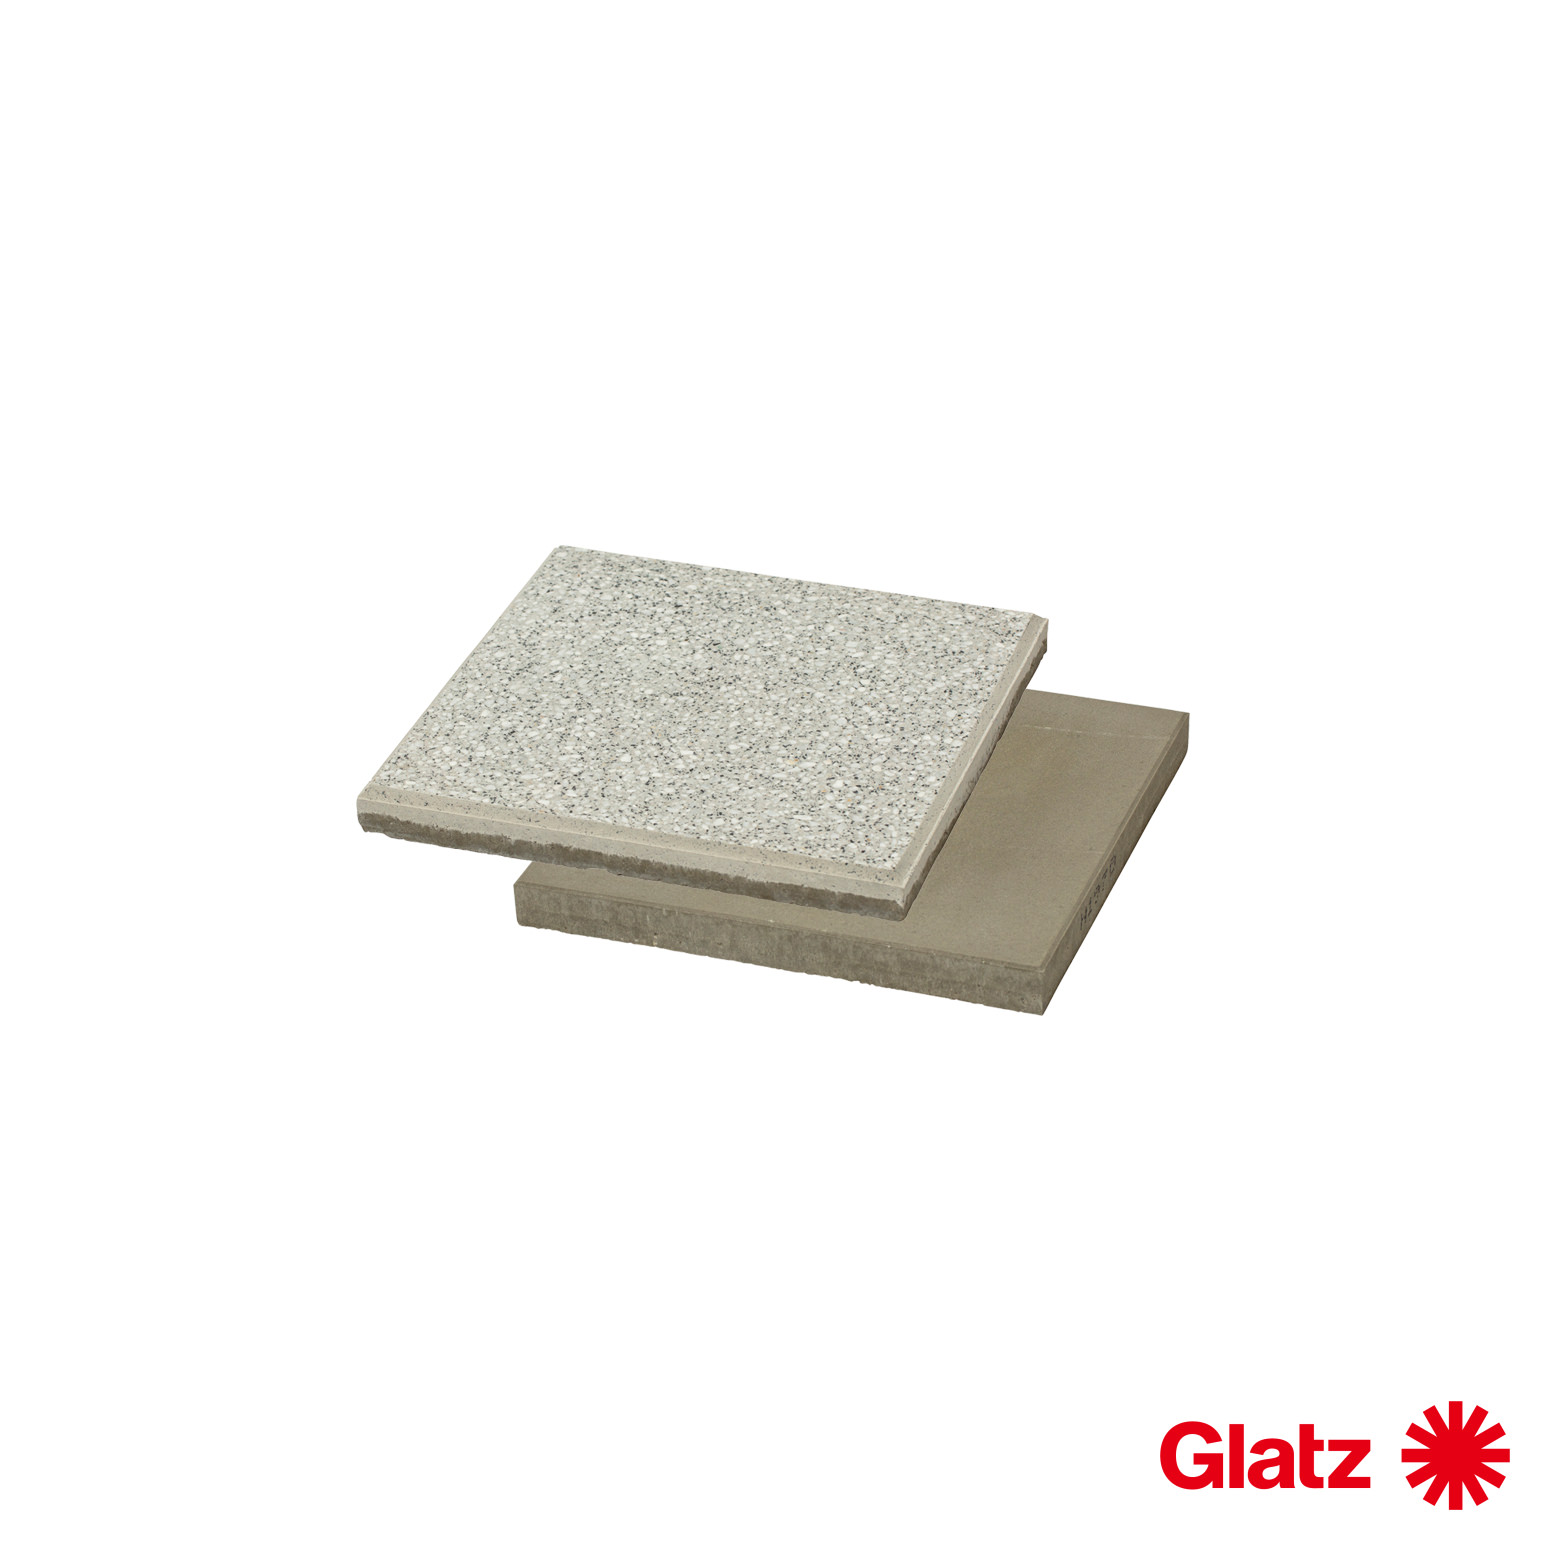 Glatz Platten-Set, 8 Stück, 40x40x4 cm, (ca. 115 kg), 4 Stück Beton